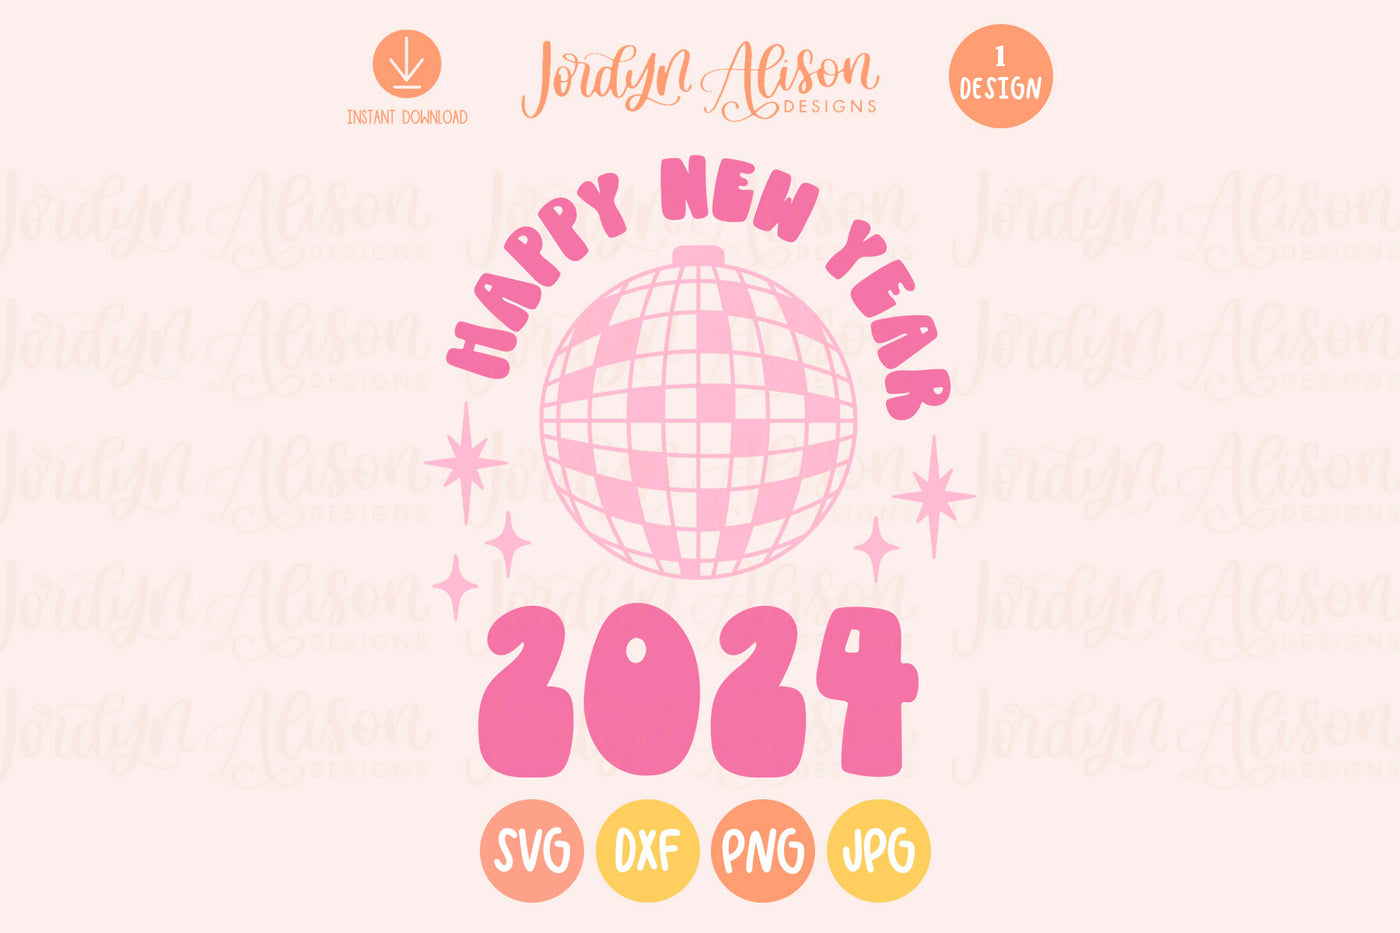 Happy New Year SVG